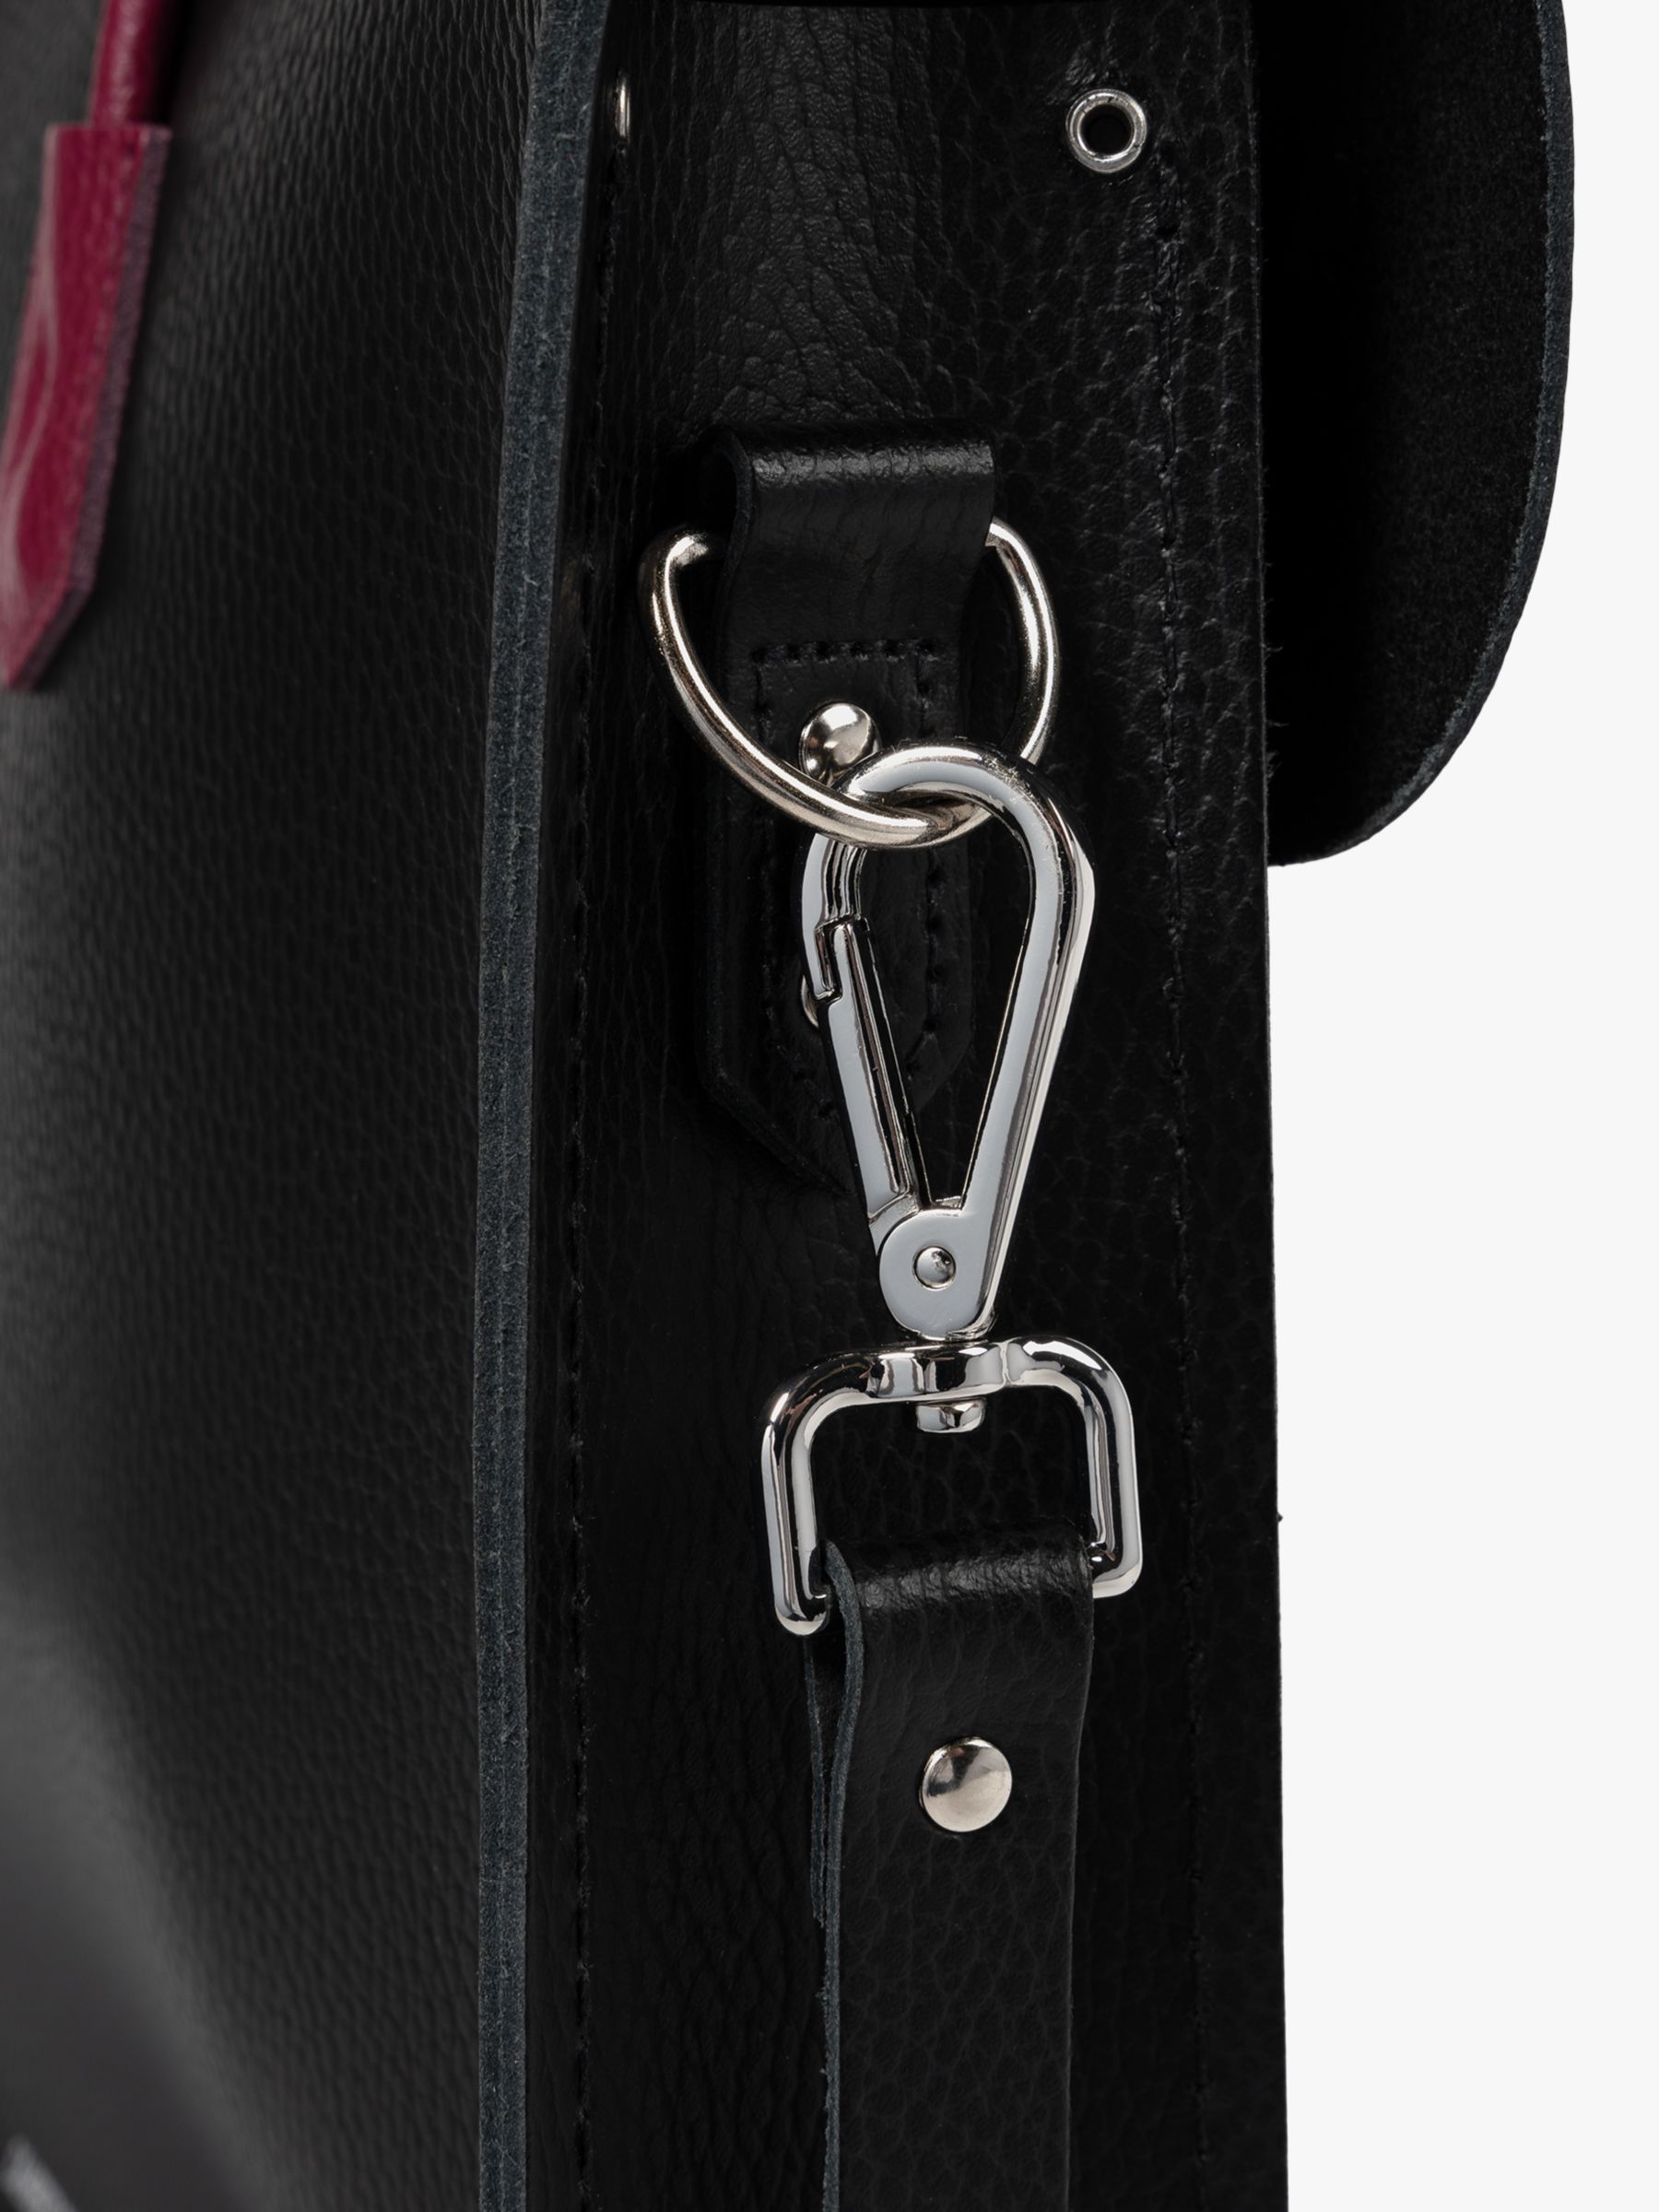 Buy Cambridge Satchel The Music Case Celtic Grain Leather Bag, Black/Red Online at johnlewis.com